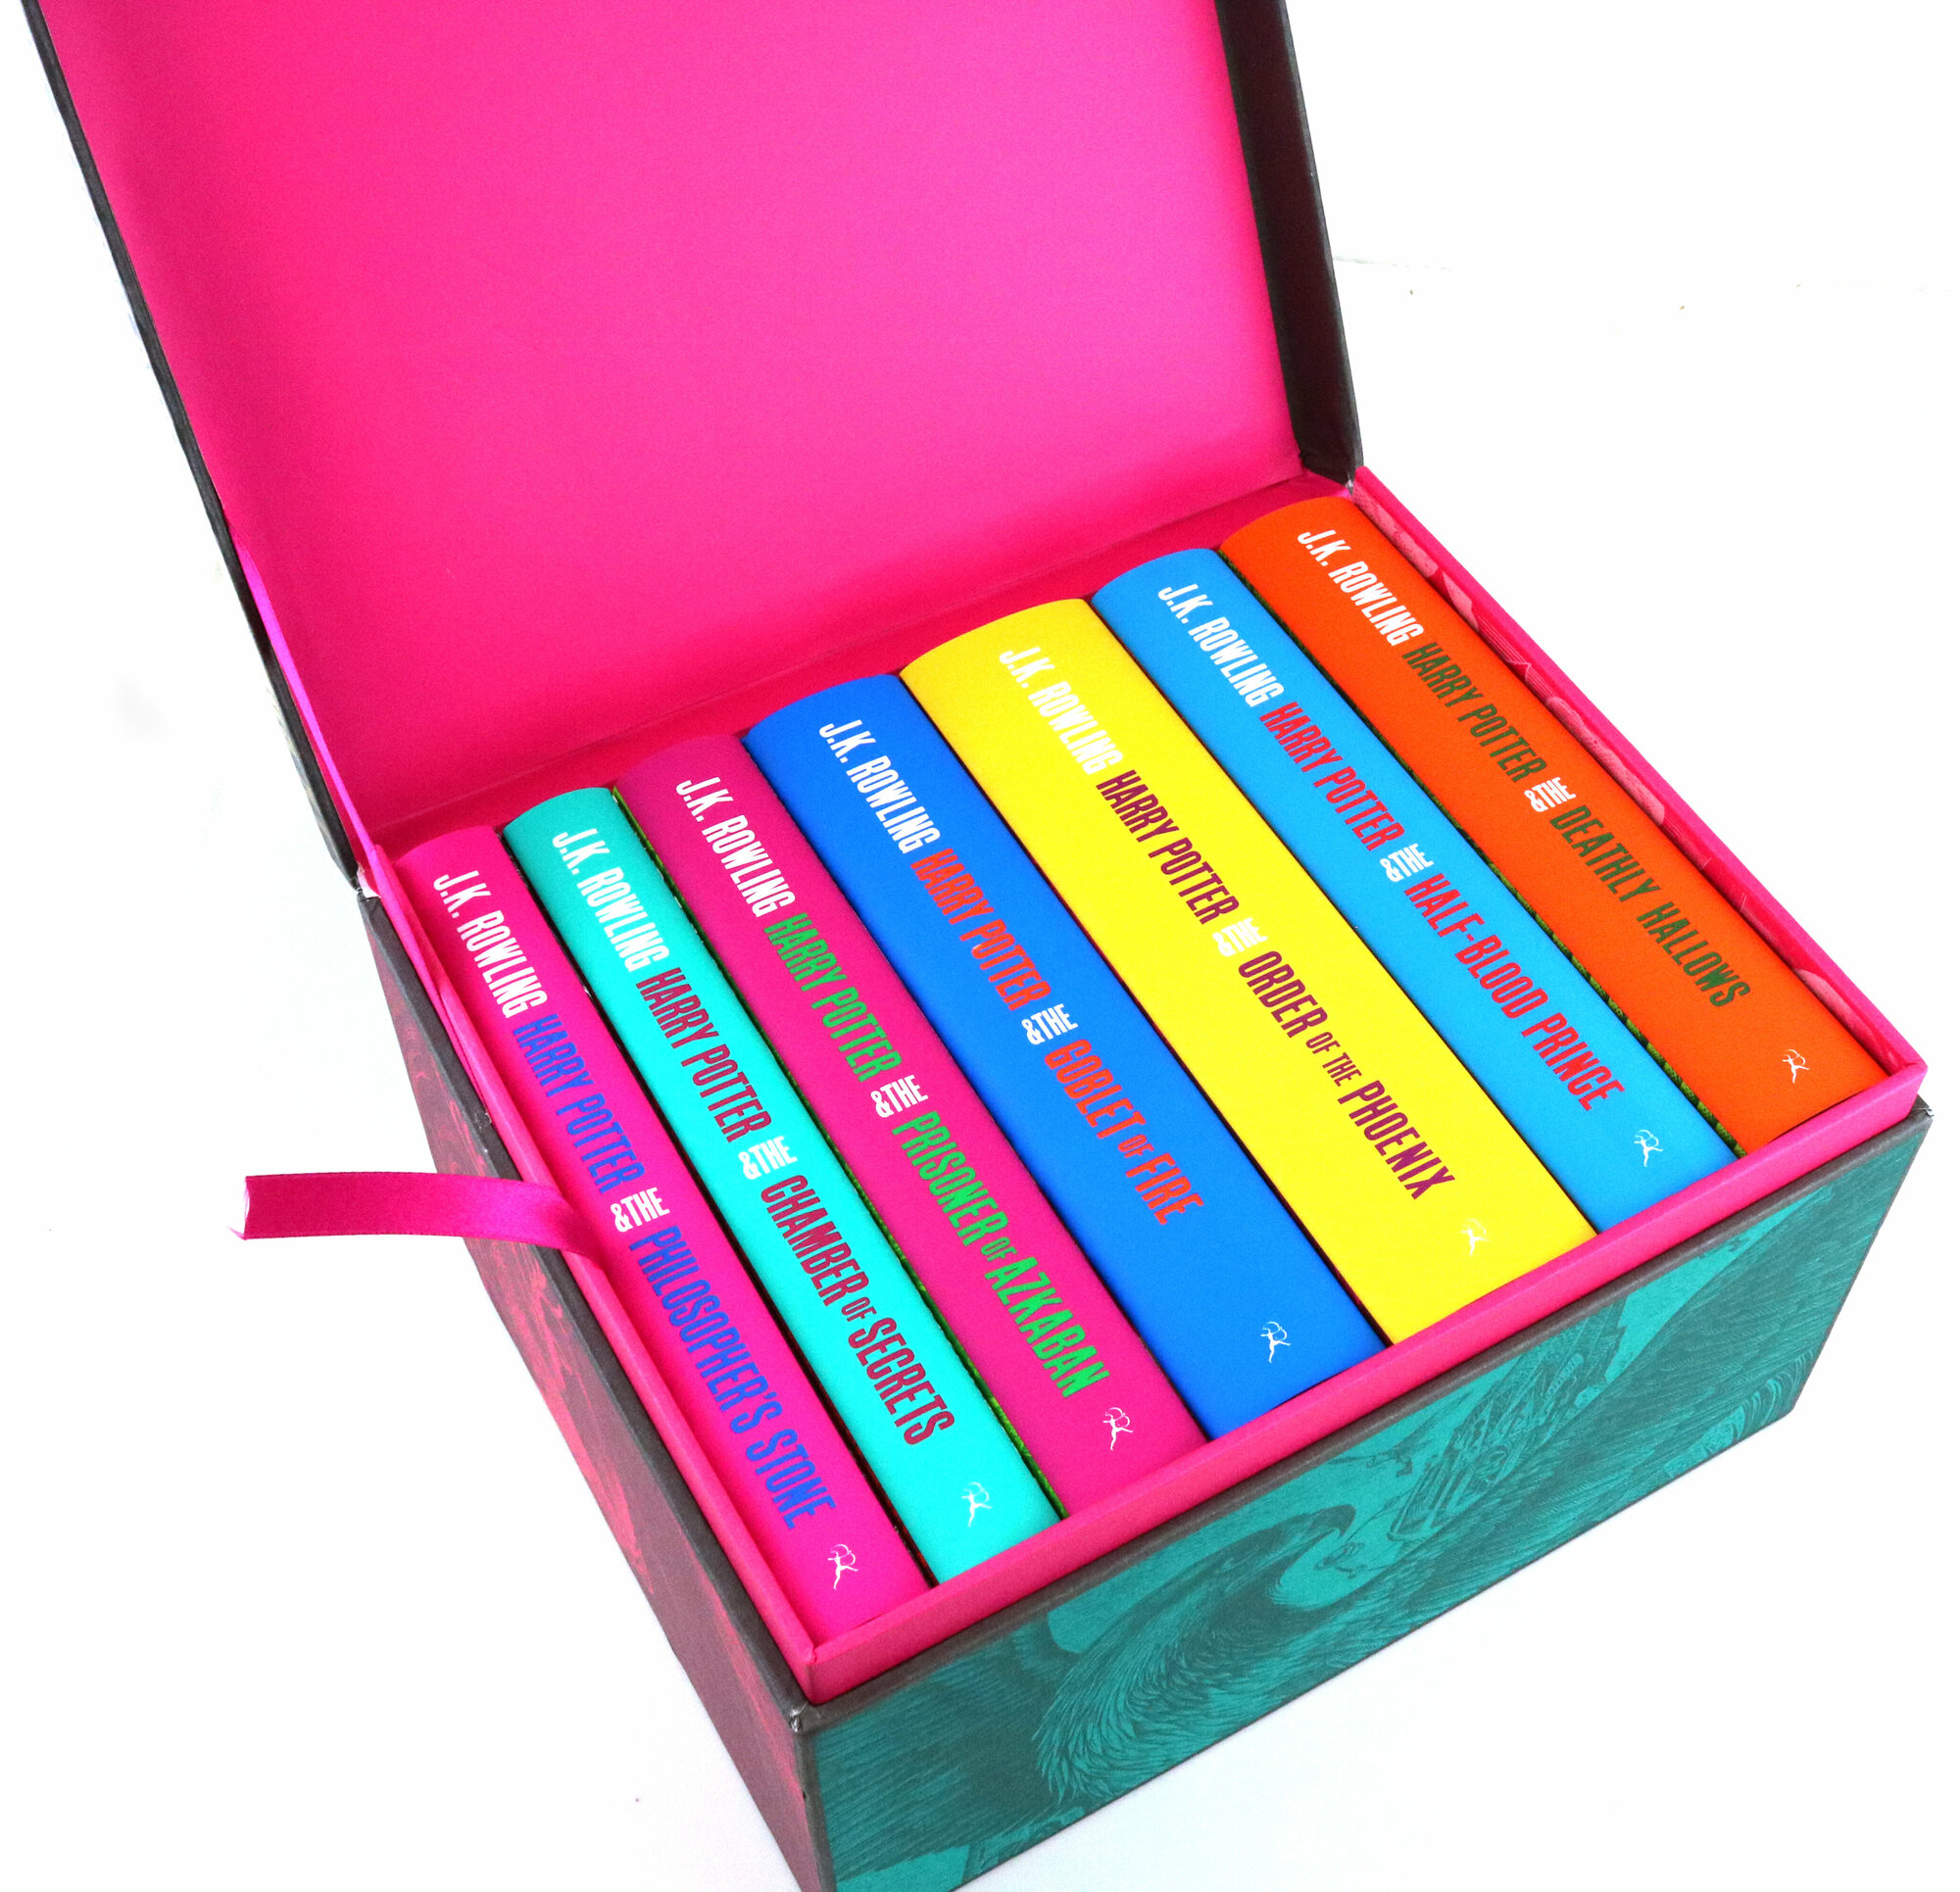 Harry Potter The Complete Collection Adult Box Set комплект из 7 книг - фото №10